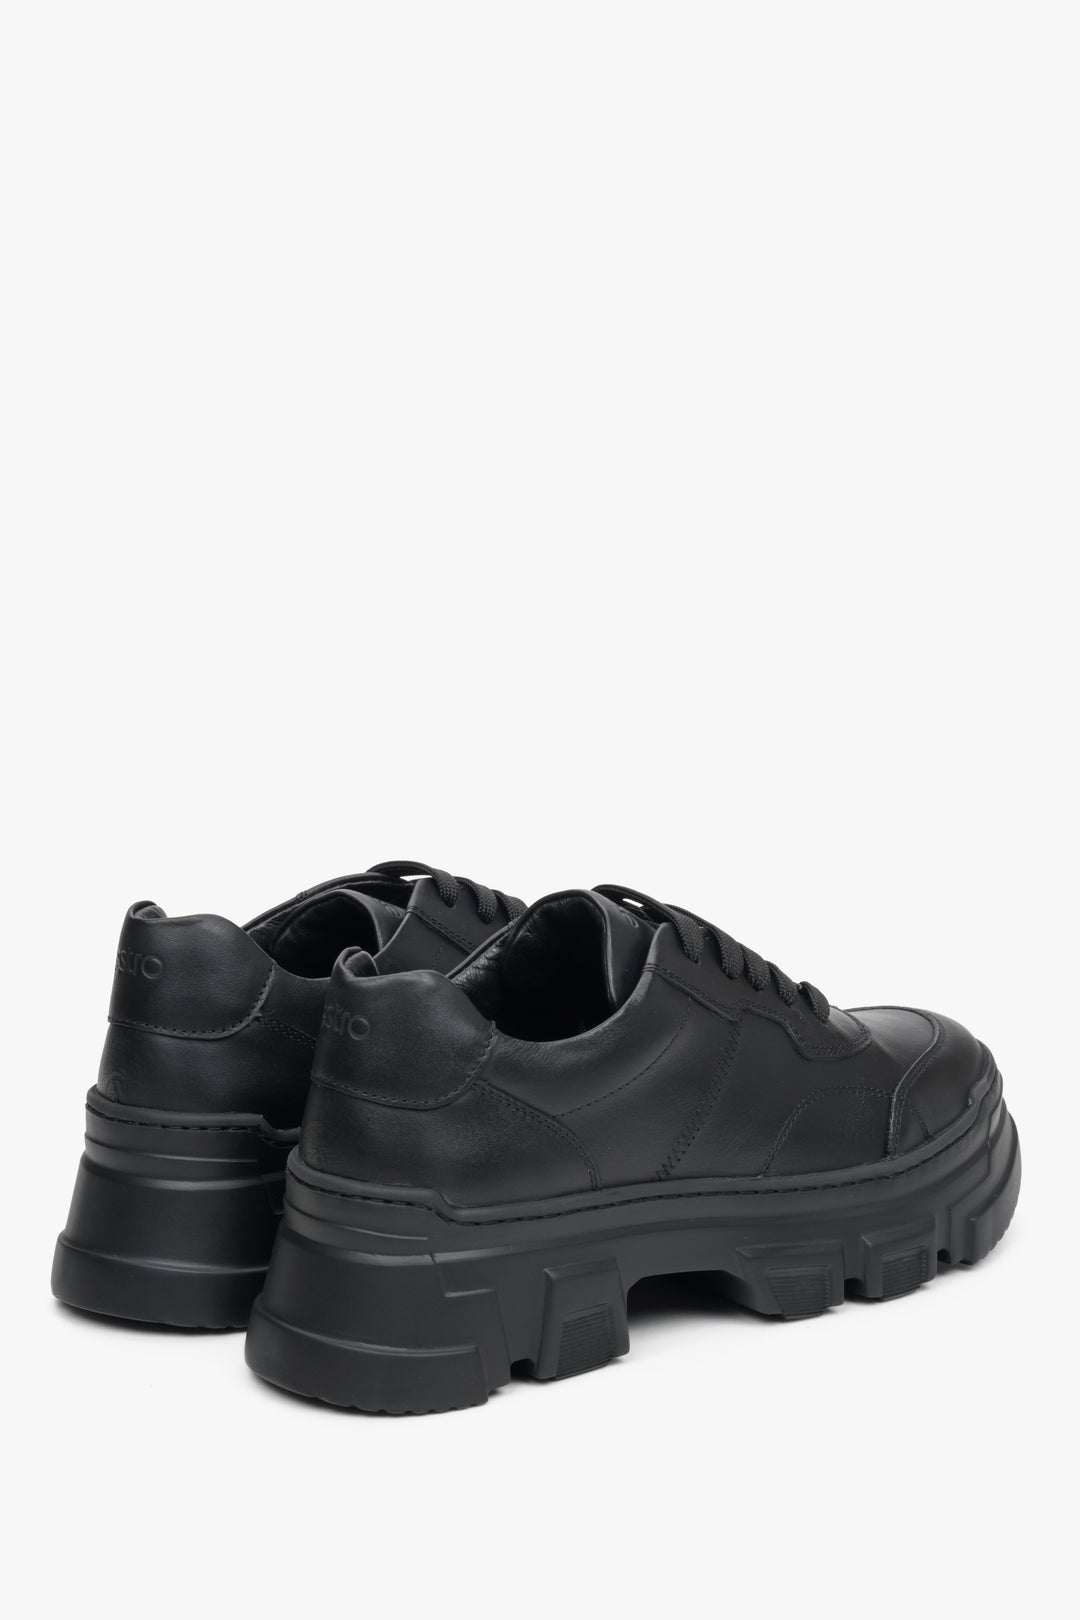 Women's black chunky platform sneakers, Estro brand.